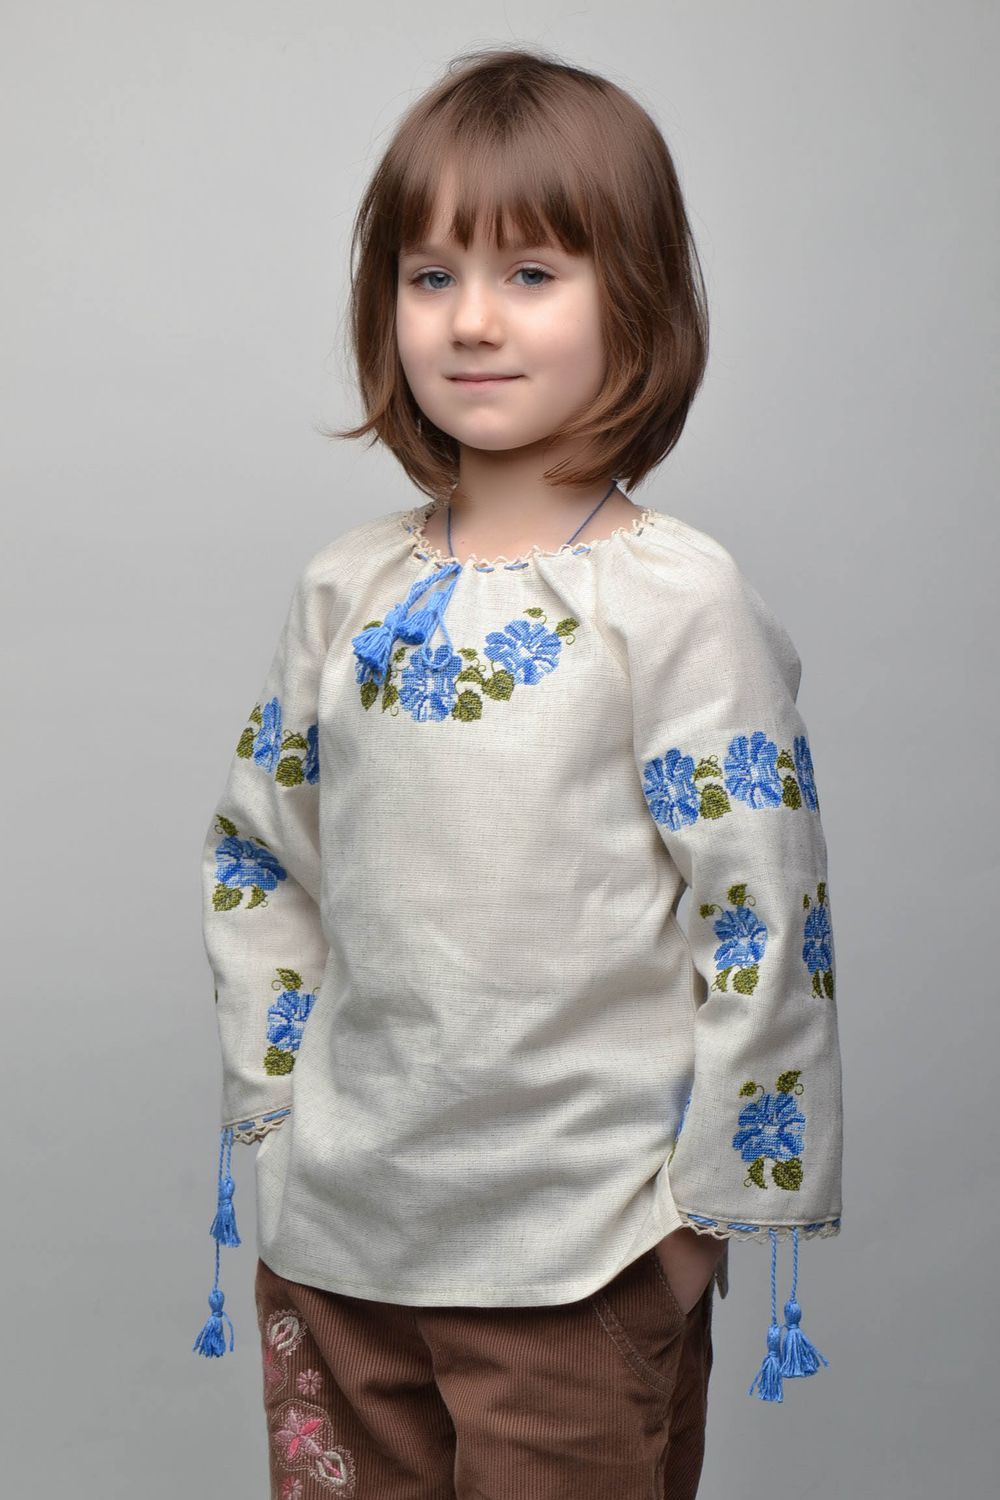 Children's cross stitched shirt photo 1